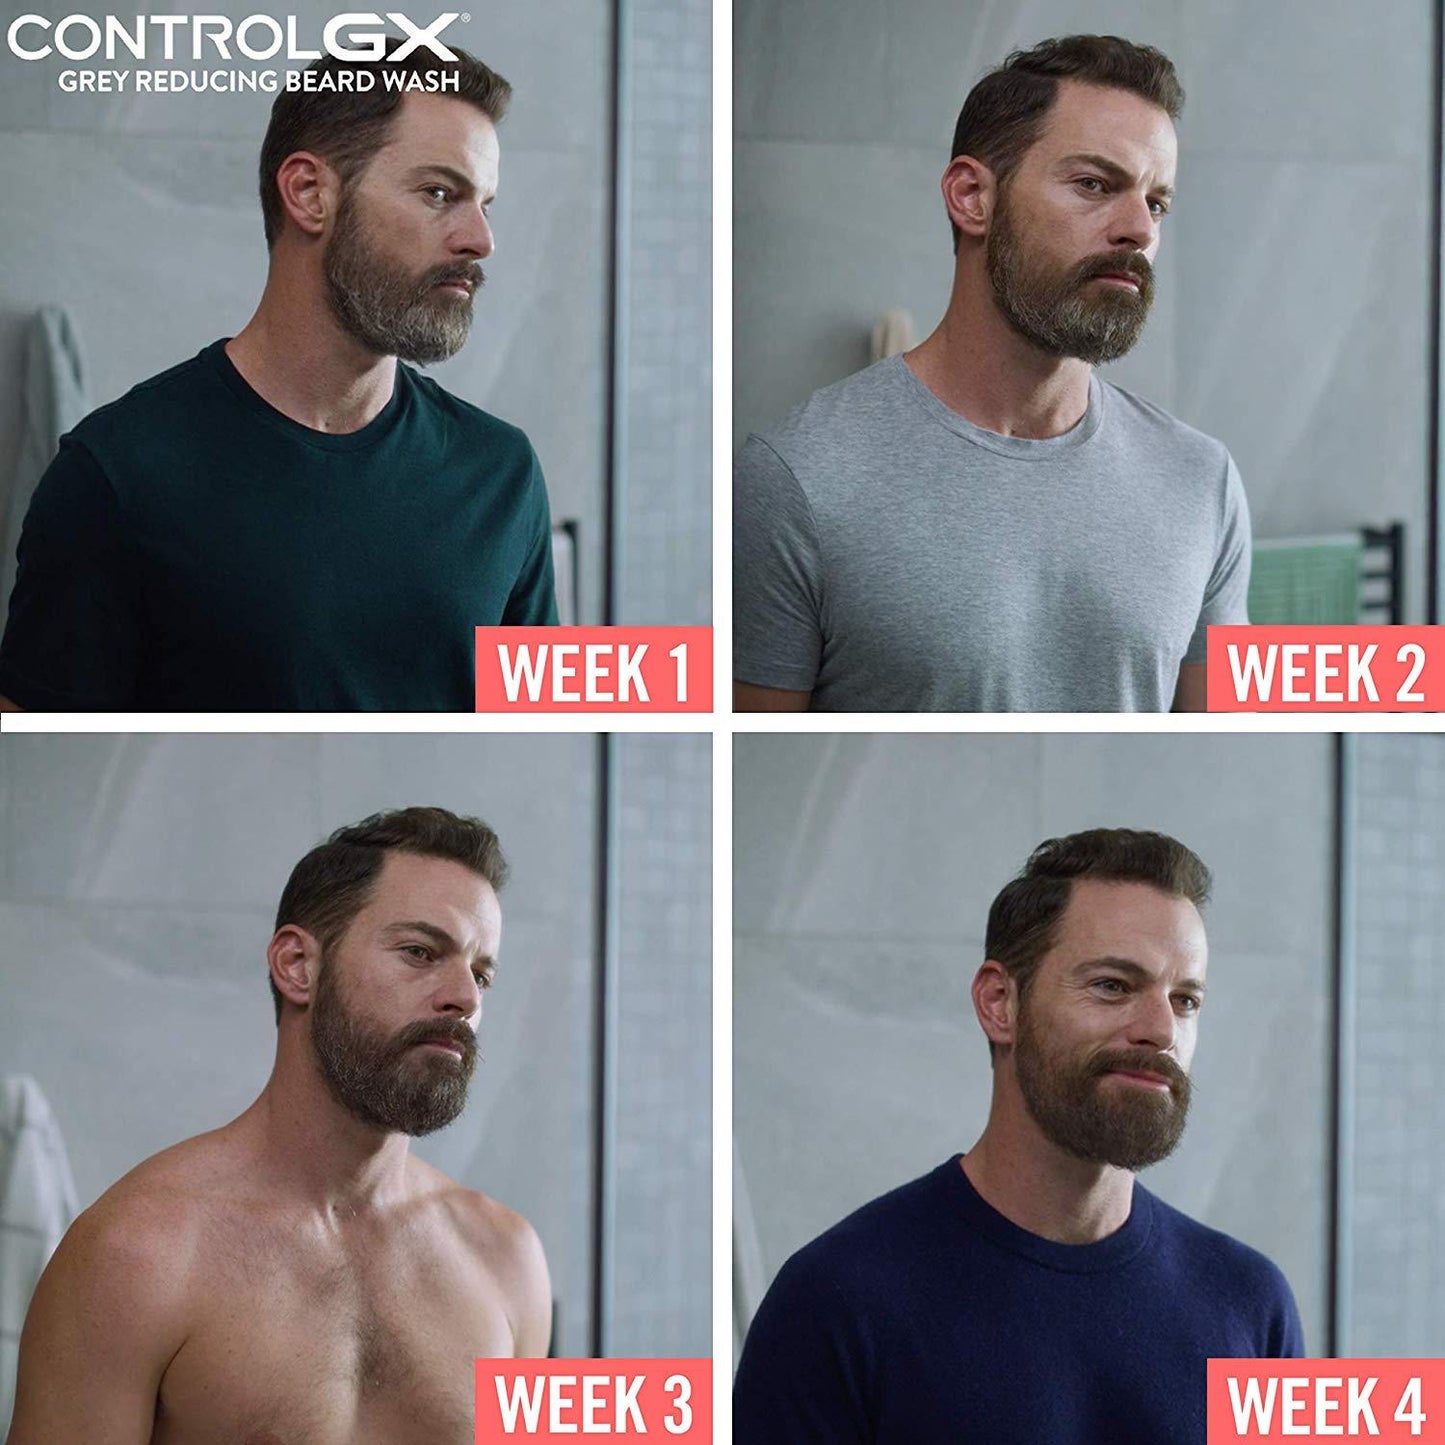 Just For Men Control Gx Grey Reducing Beard Shampoo for Mustache & Beard, 4 Ounce